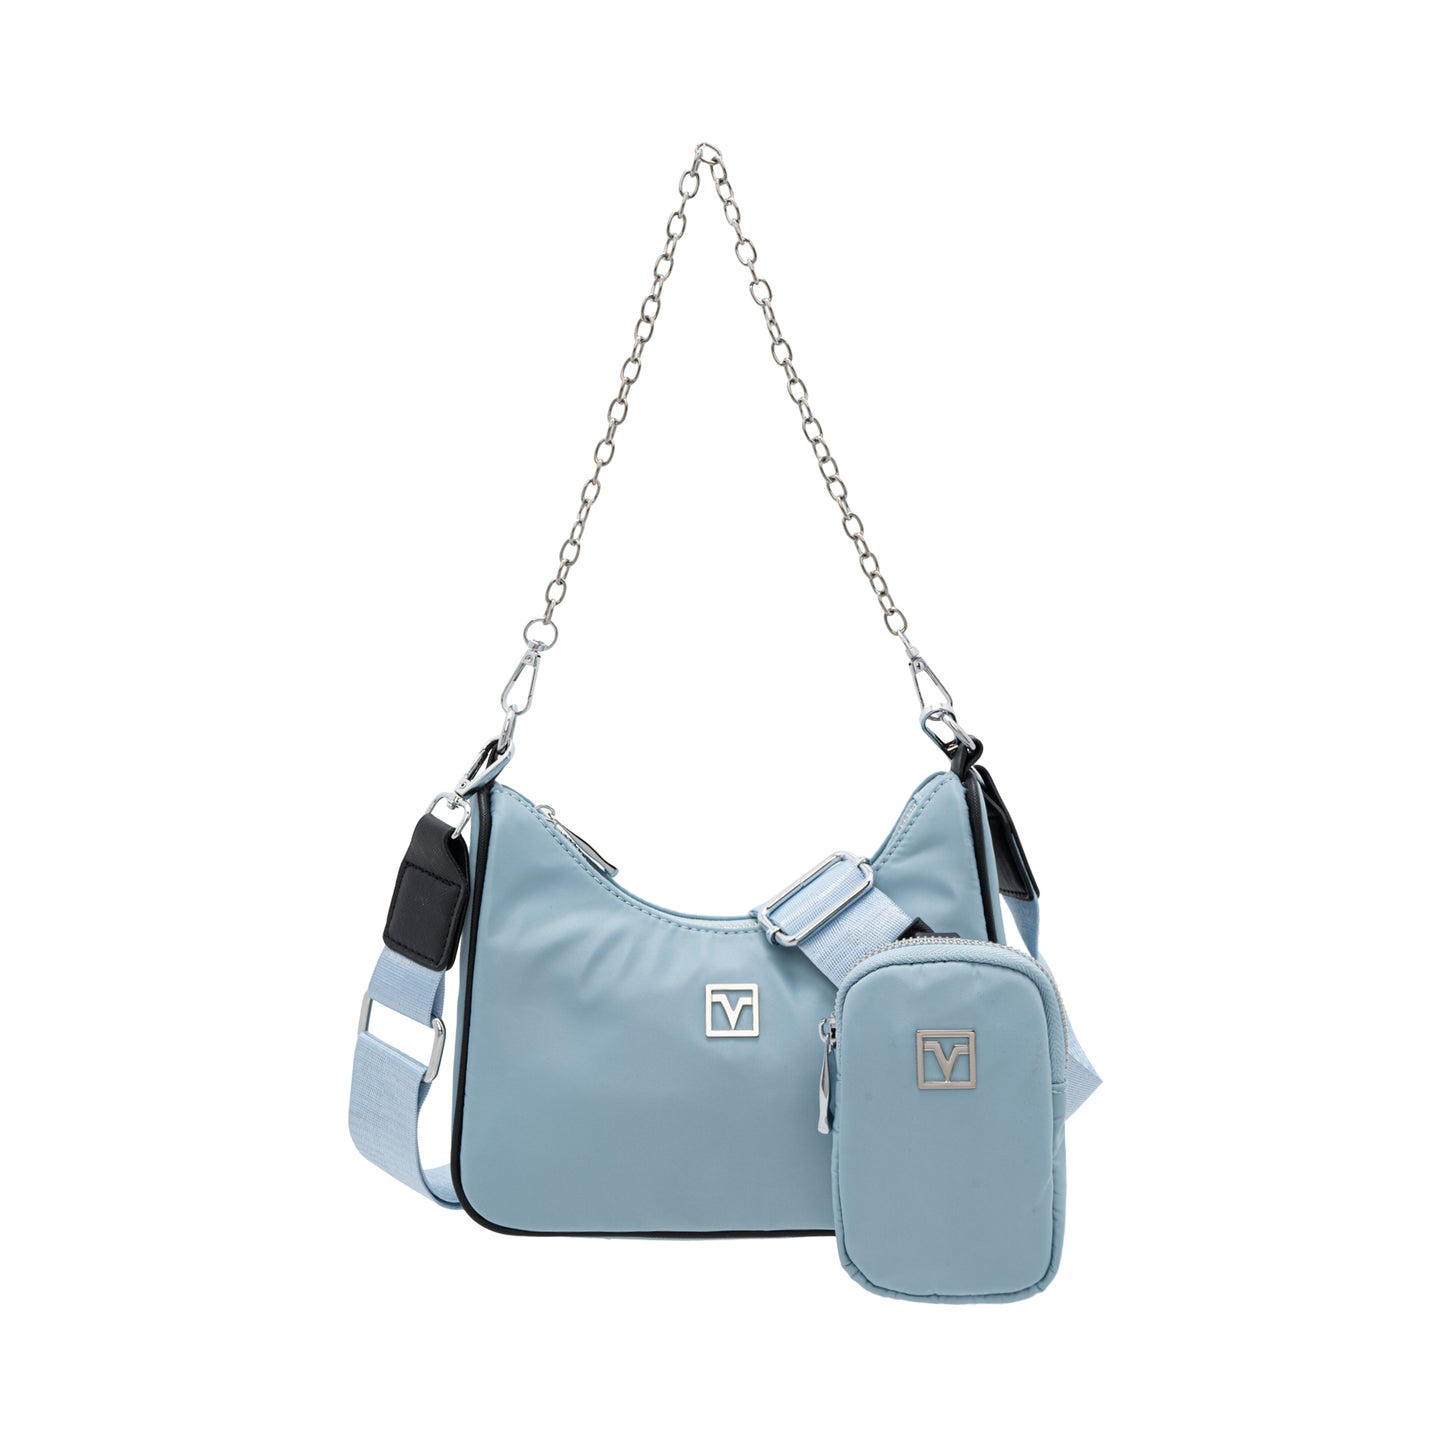 Valentino Rudy Italy Ladies's Sling bag